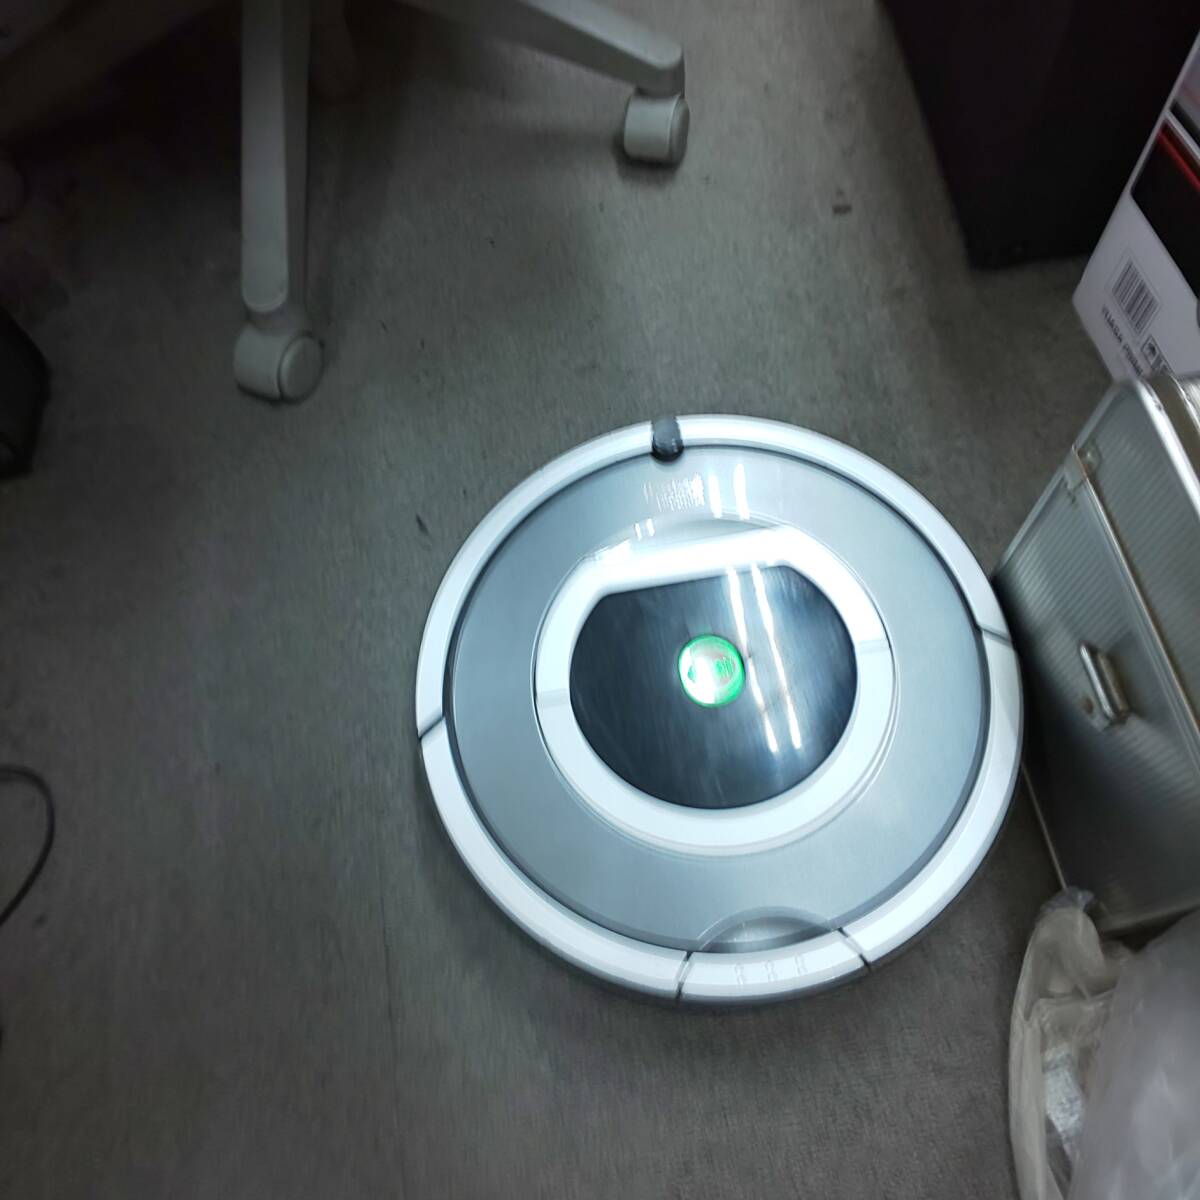 * I робот *iRobot Roomba780 roomba 780 электризация проверка settled б/у текущее состояние немедленная отправка 